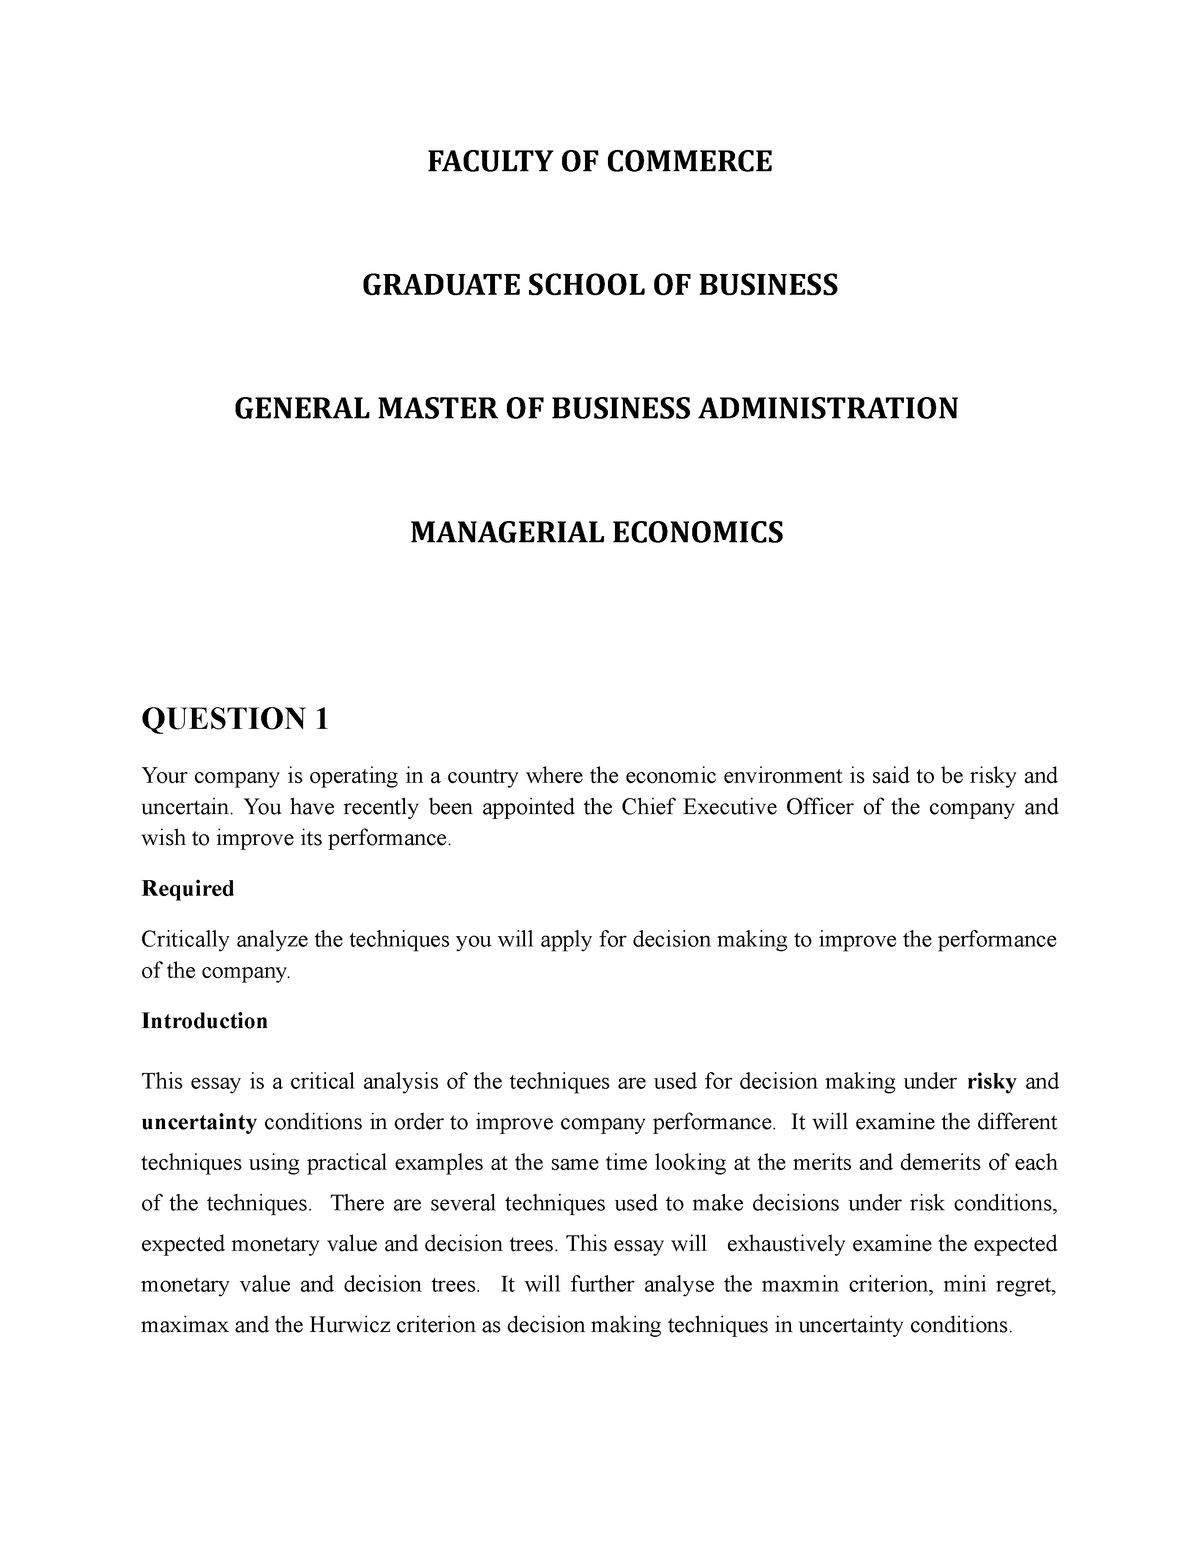 managerial economics assignment 2